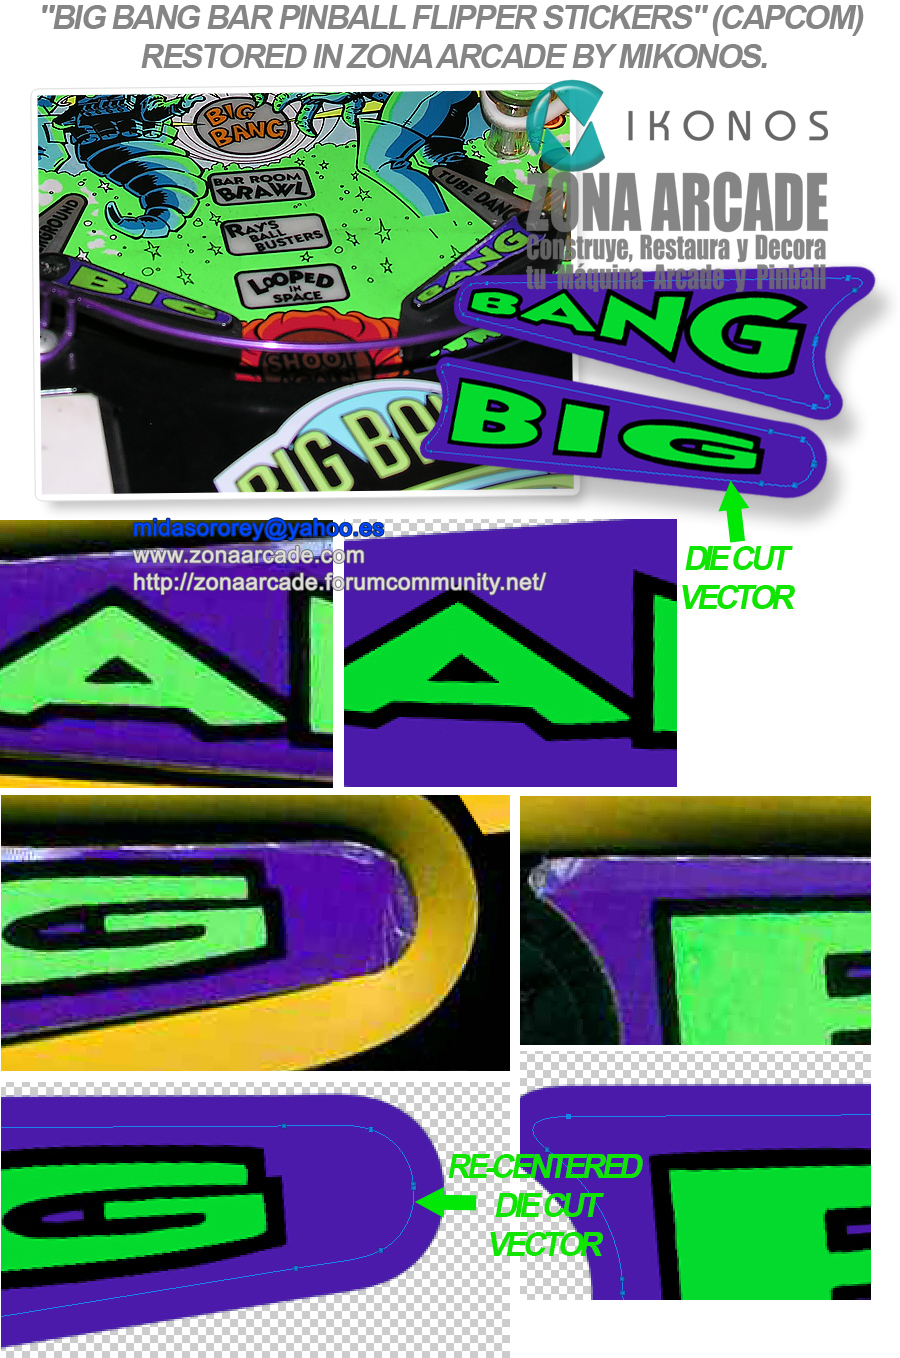 Big-Bang-Pinball-Flipper Stickers-Restored-Mikonos1